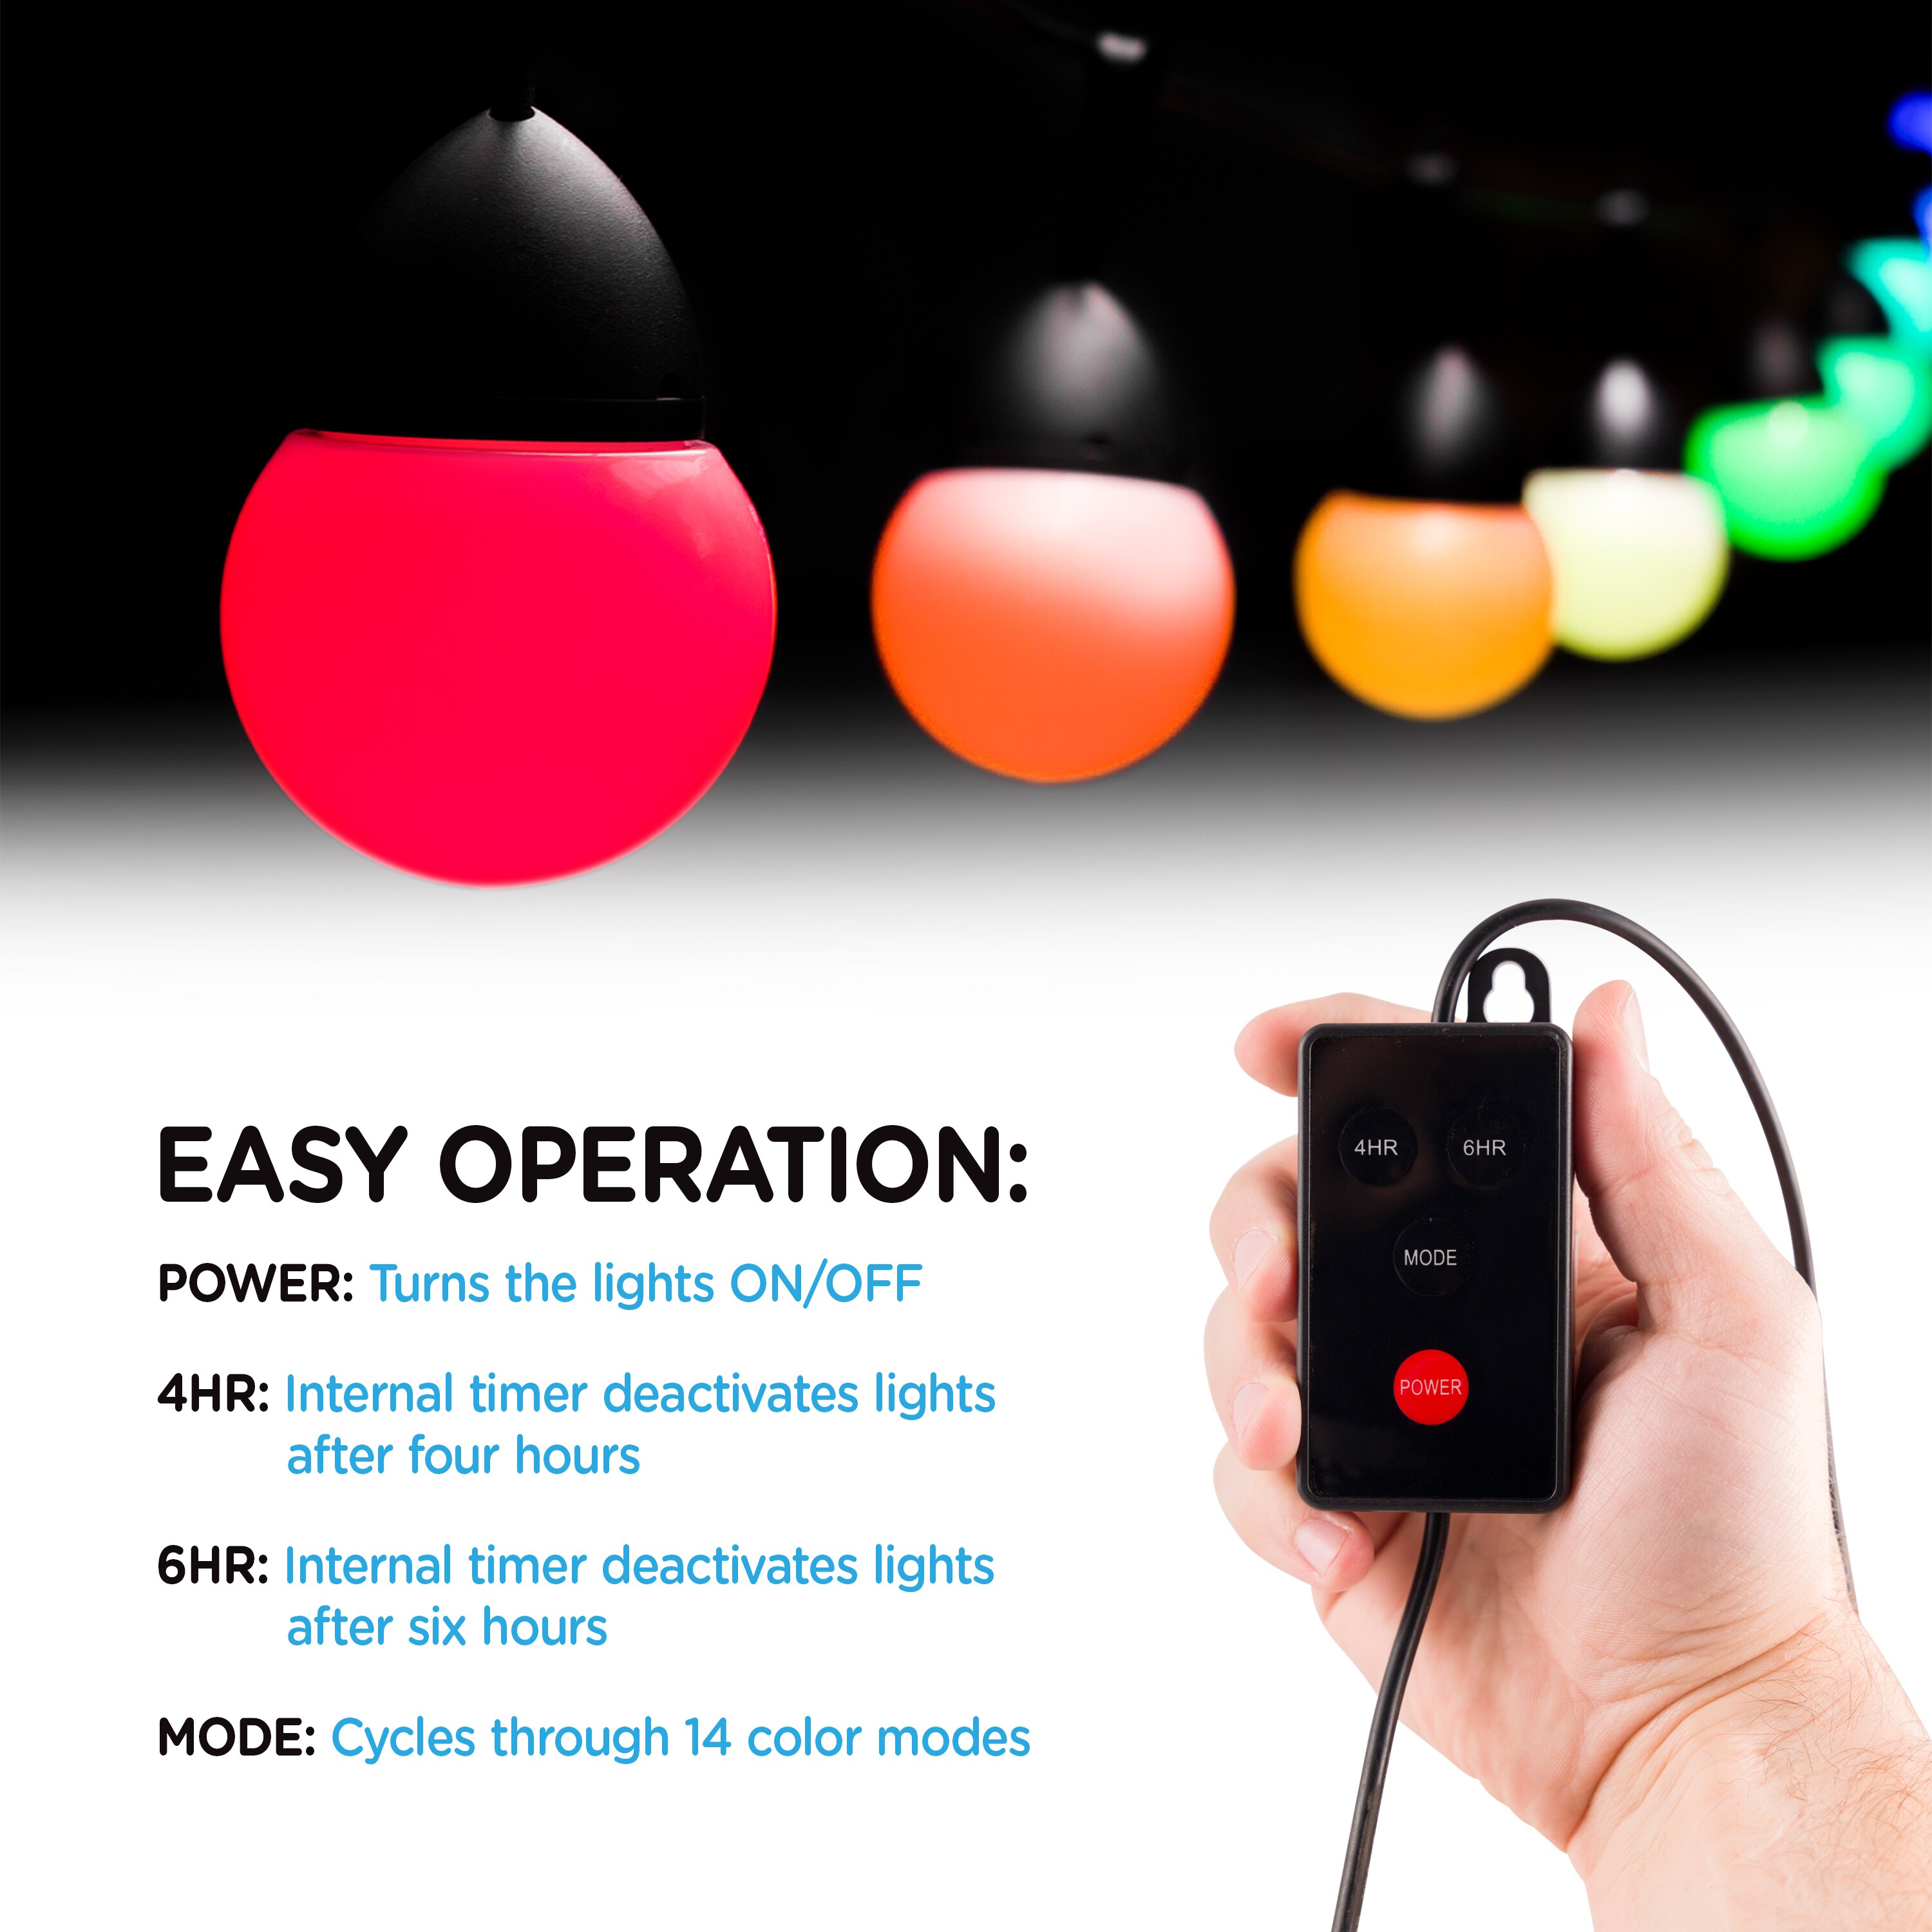 Enbrighten-Solar-Light-Bundle-Enbrighten-USB-Powered-Color-Changing-LED -Cafe-Lights-12-Bulbs-12ft-Black-Cord-and-Solar-Panel-Power-Source